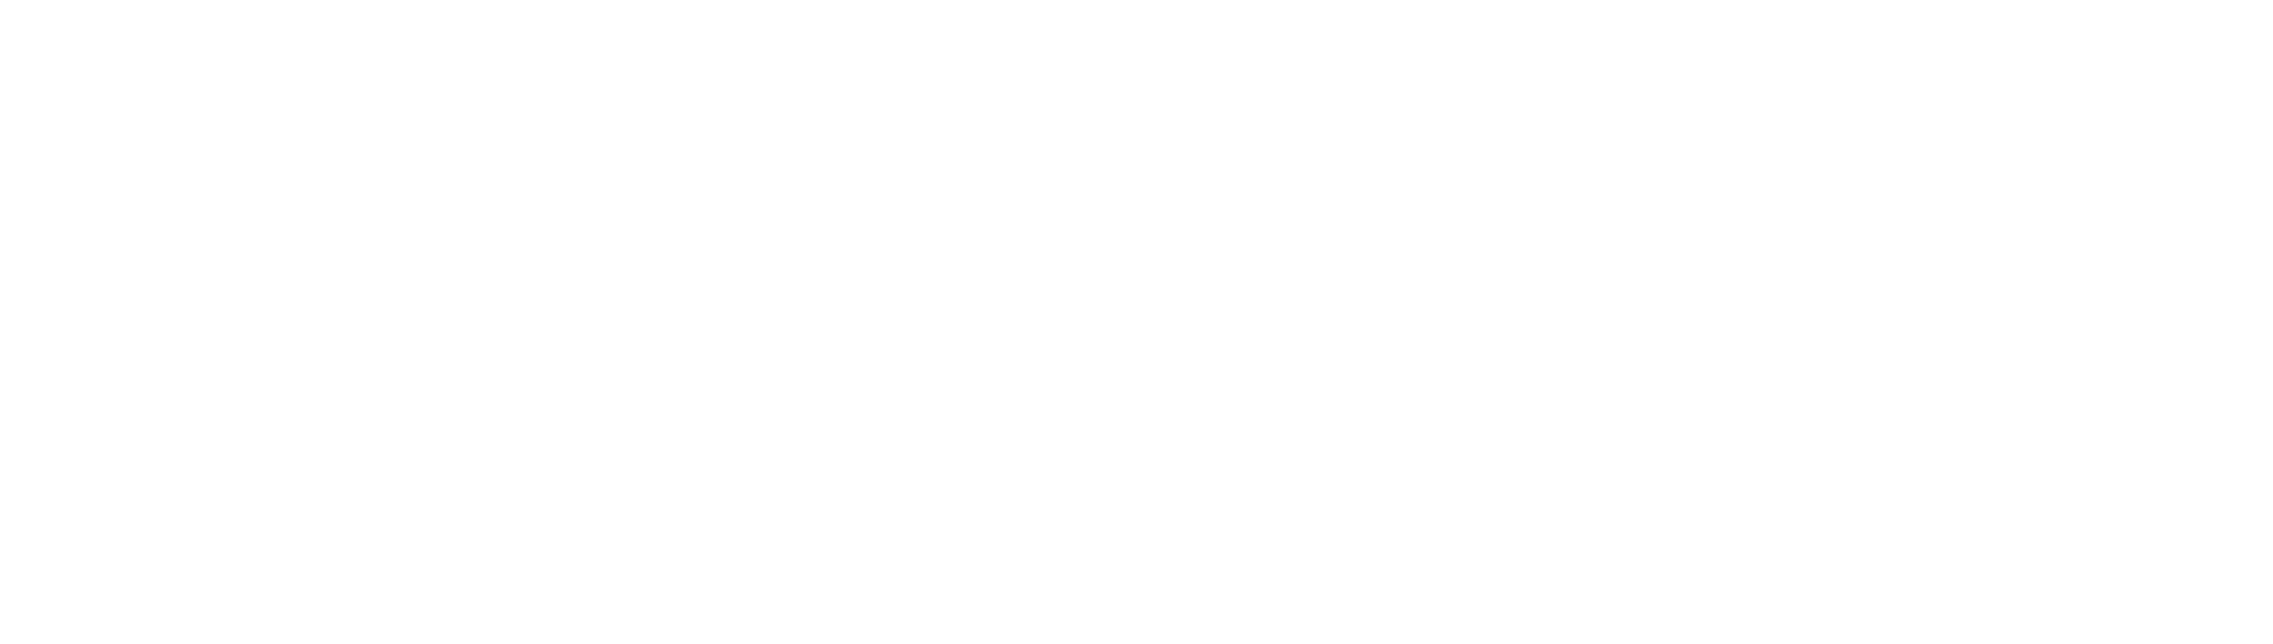 GP Support North White